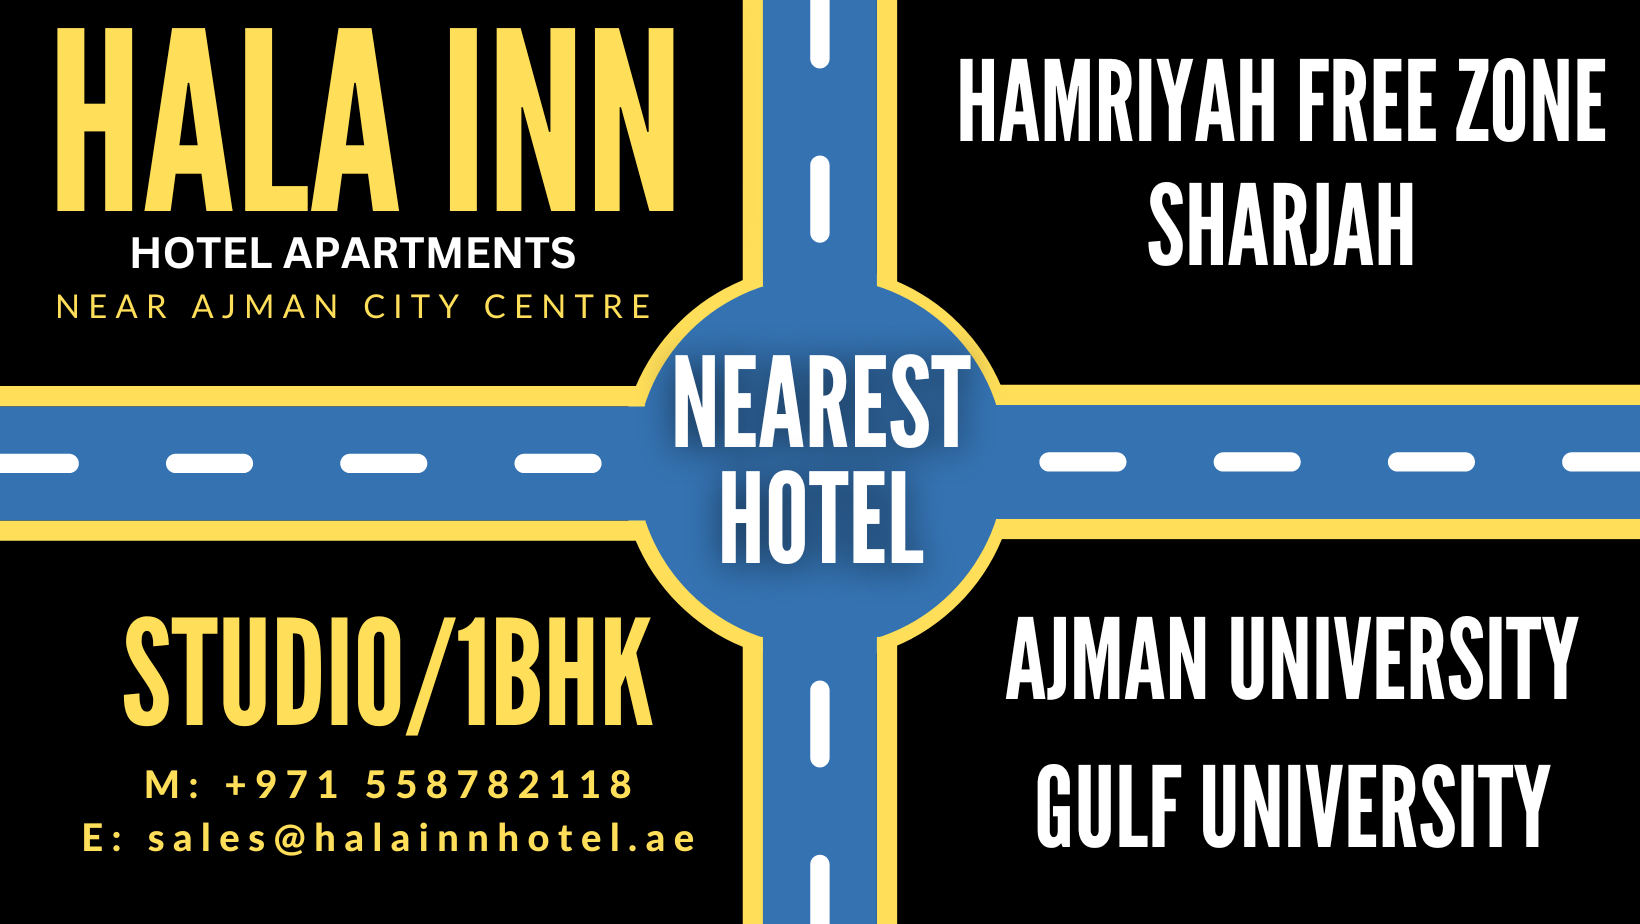 Best Hotel Apartments Closest to Hamriyah Free Zone Sharjah